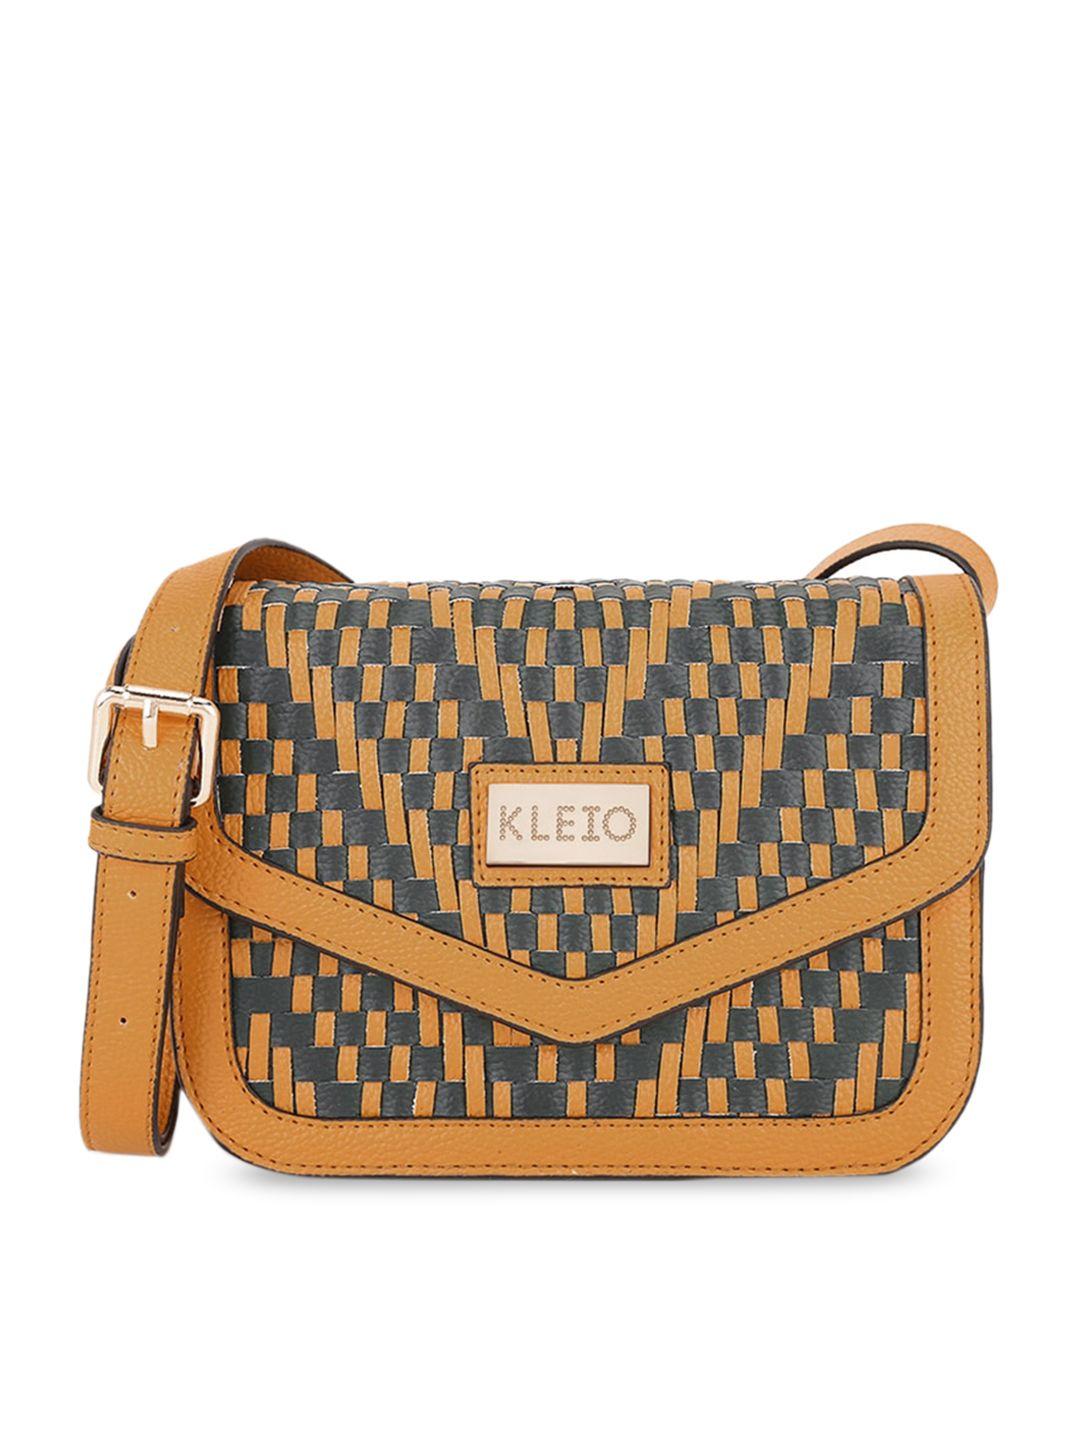 kleio twin colored weaved sling handbag